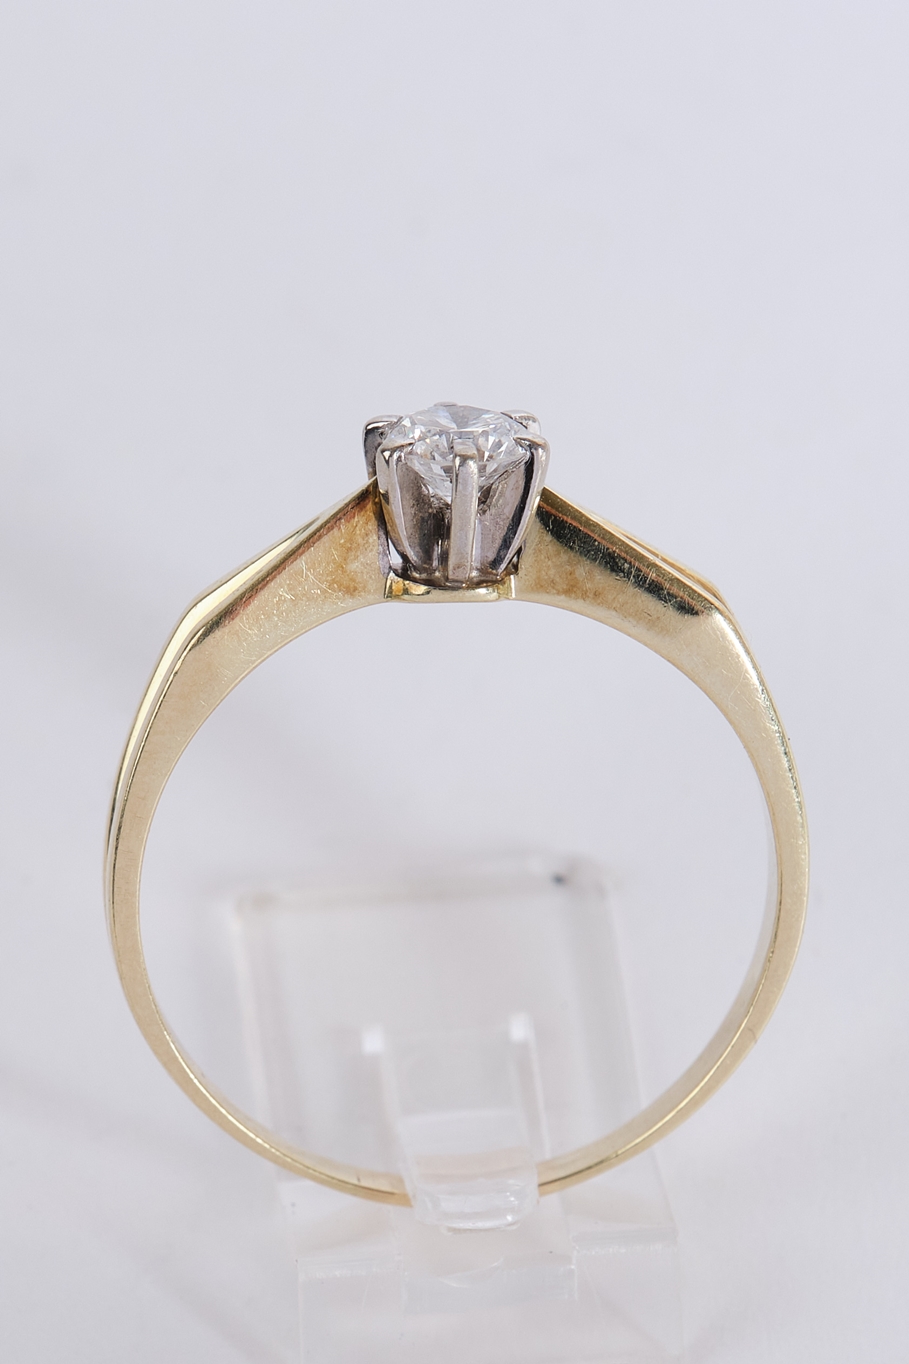 Ring, WG/GG 585, 1 Diamant ca. 0.40 ct., etwa w/si, Brillantschliff, 3.27 g, RM 19.25 - Image 3 of 3